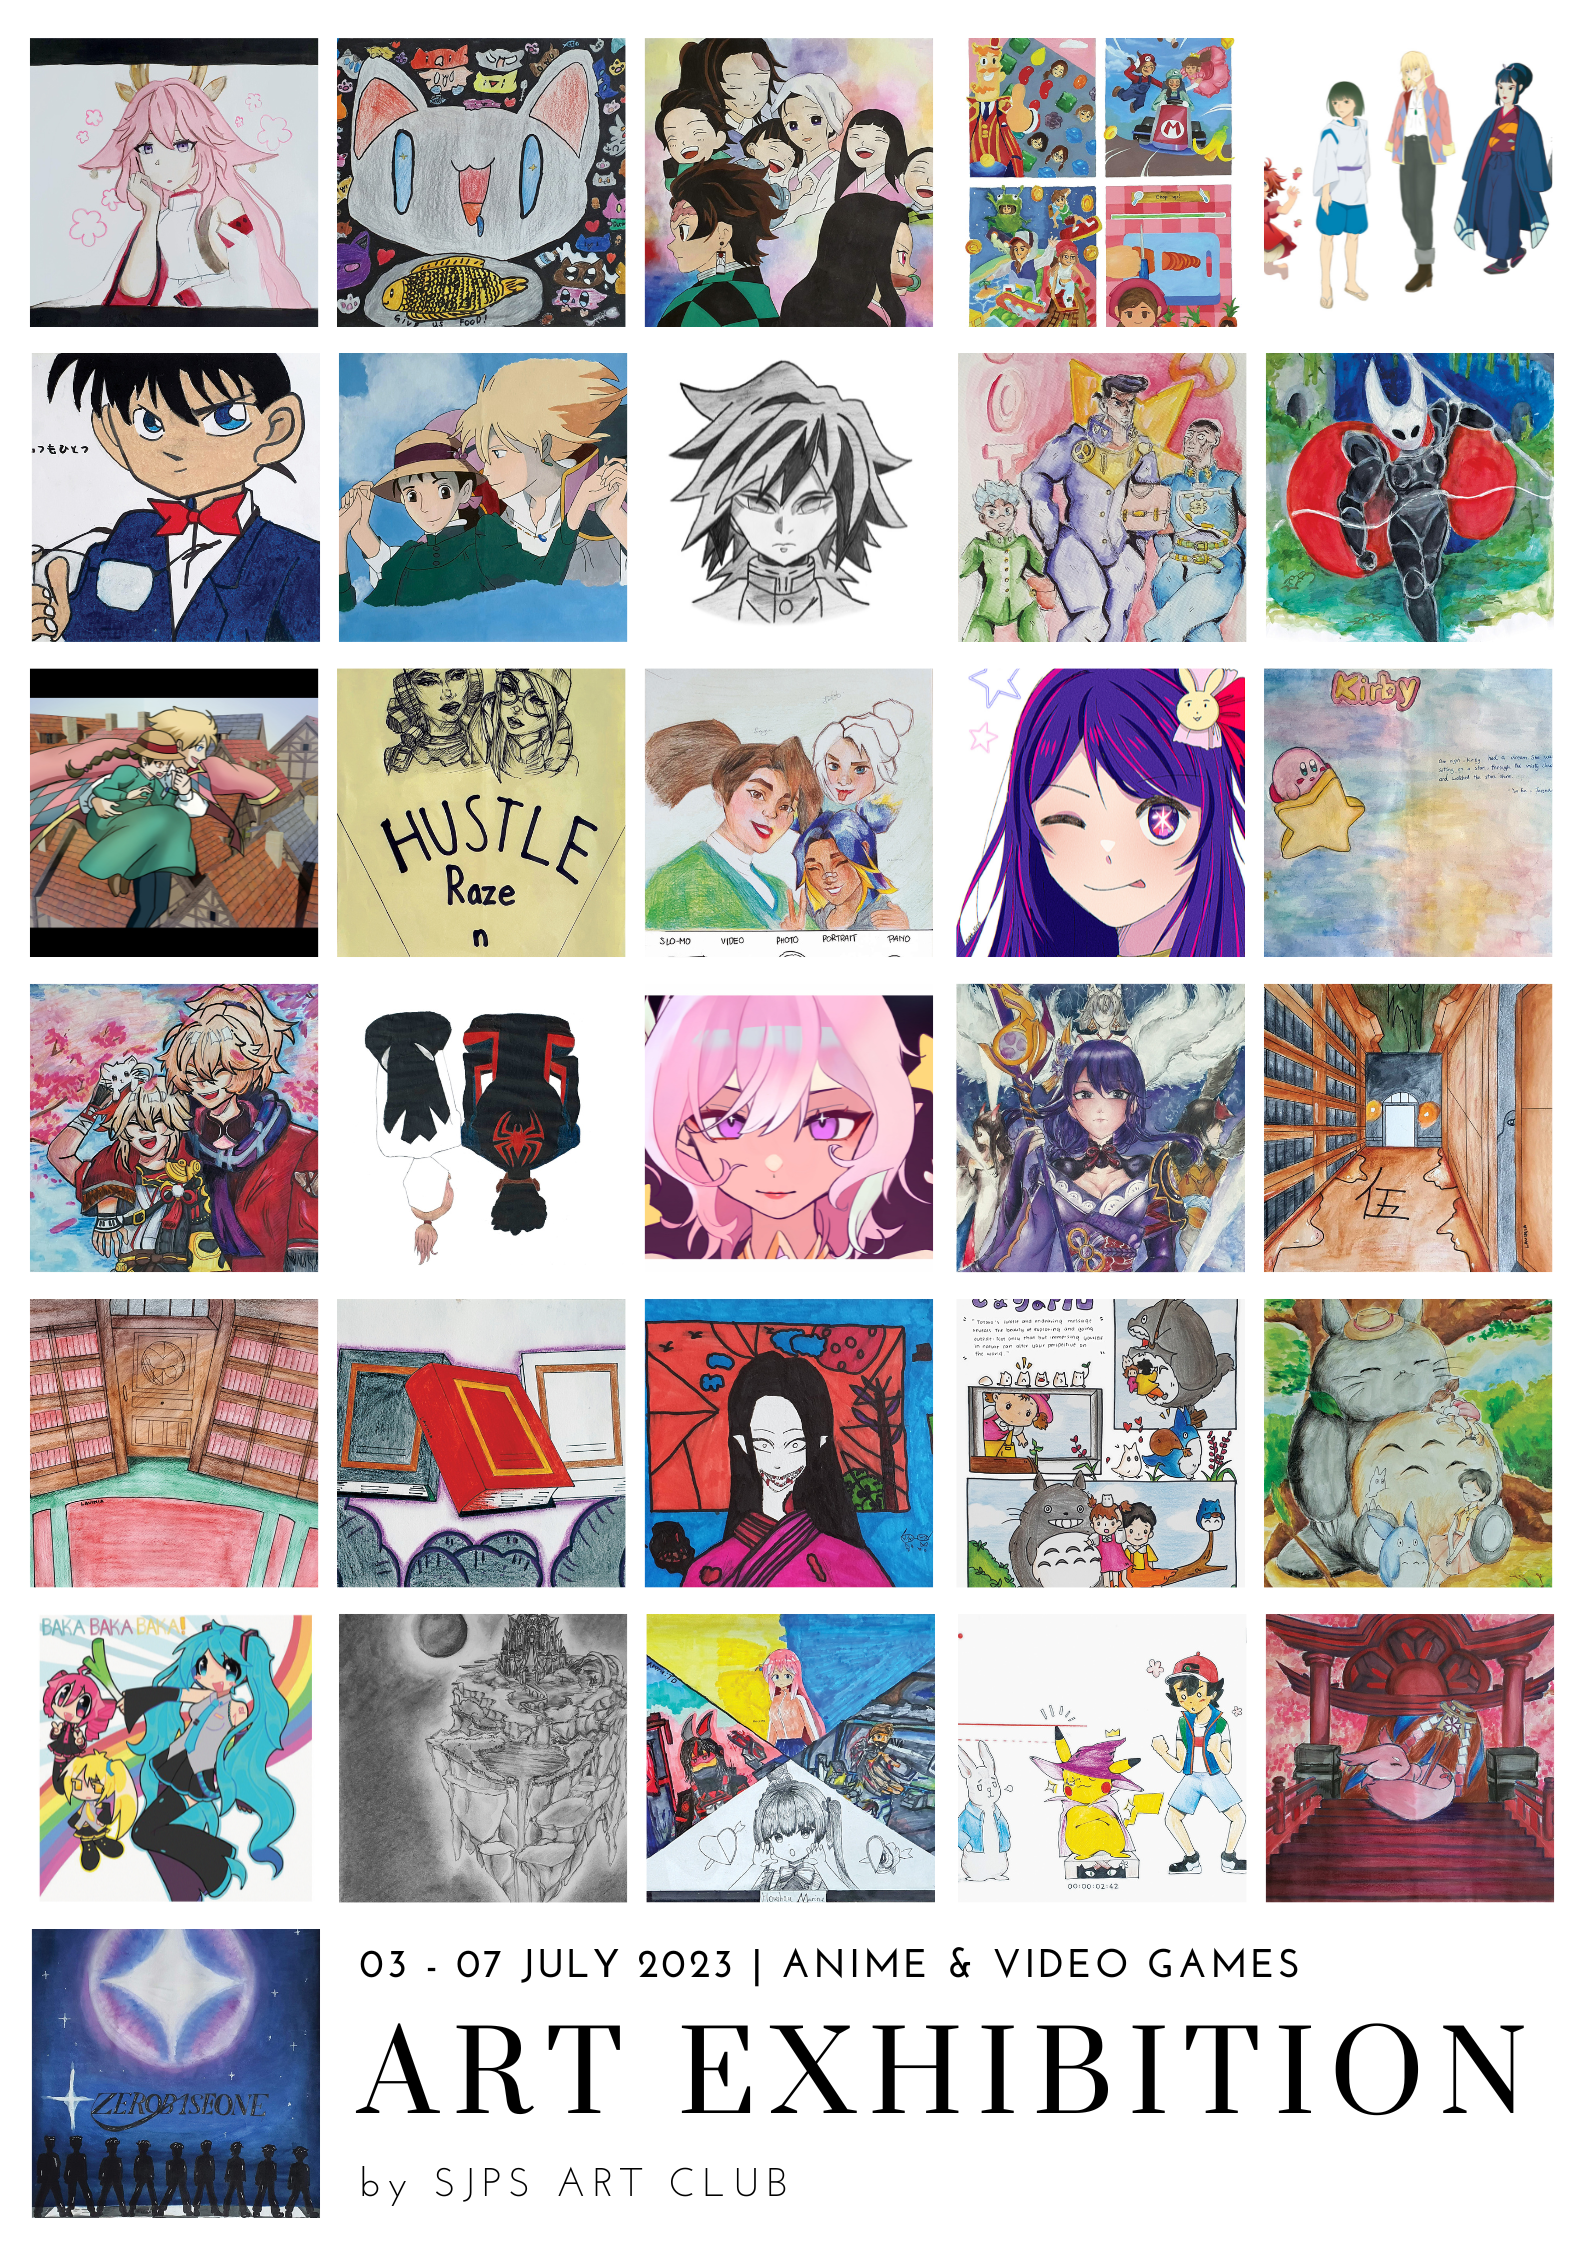 Anime & Video Games Art Exhibition 2023 by SJPS Art Club